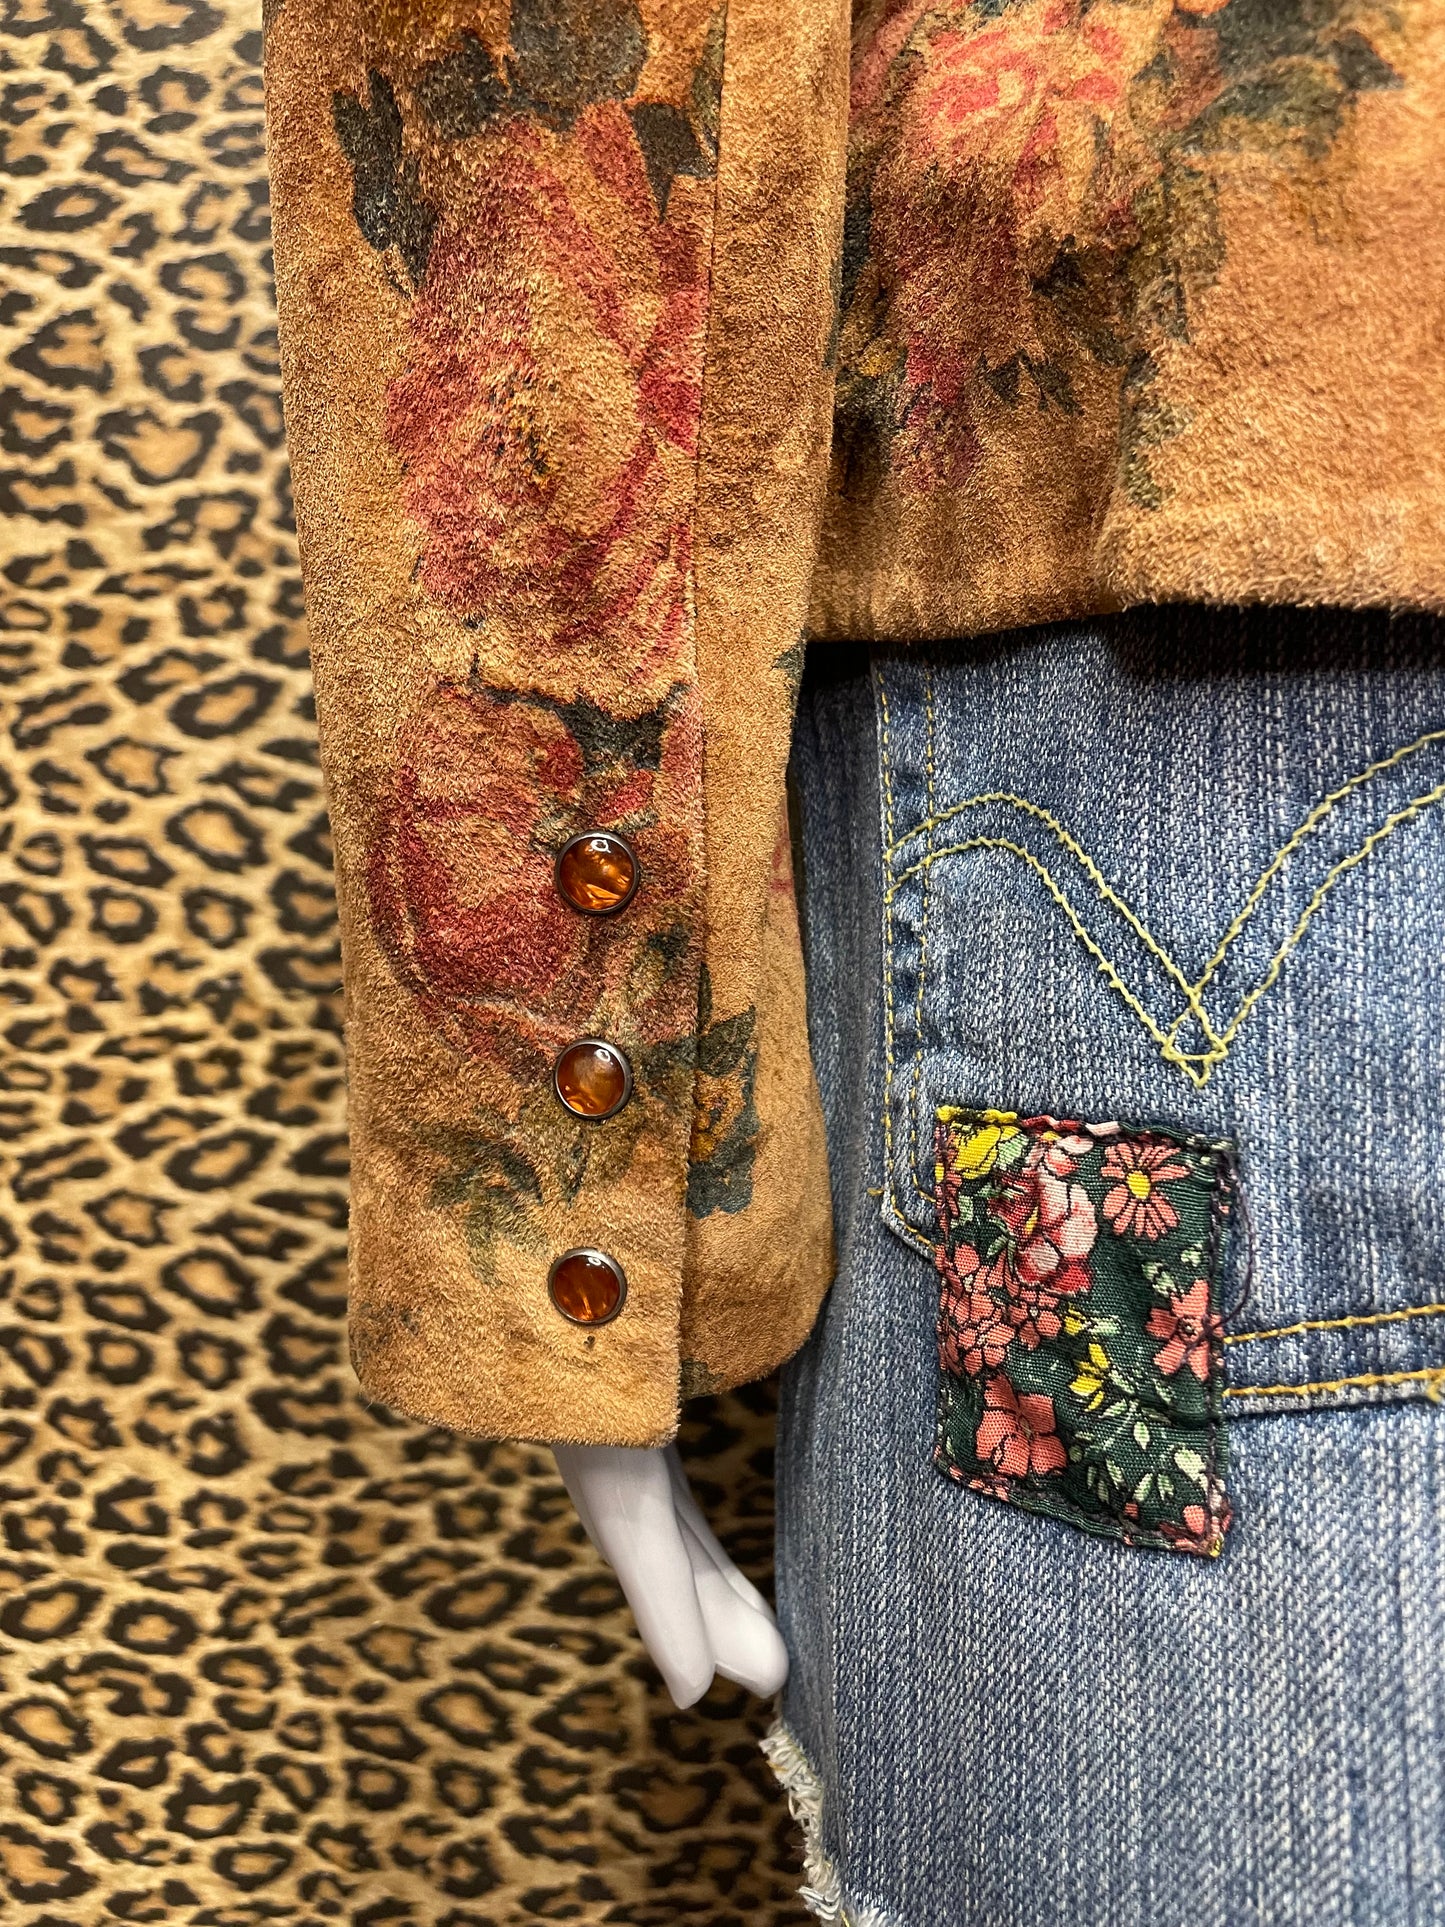 1990’s Floral Suede Jacket